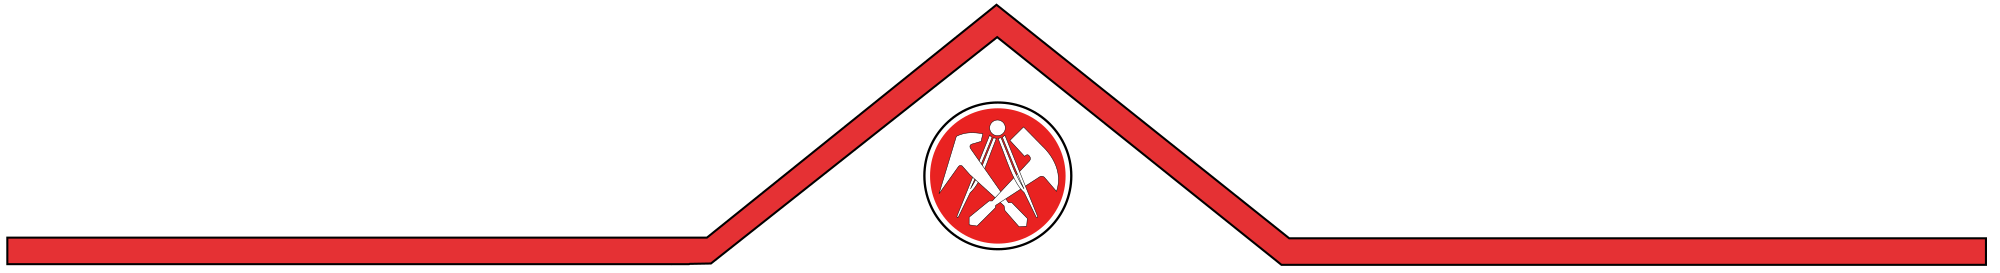 Dach mit Dachdecker Wappen